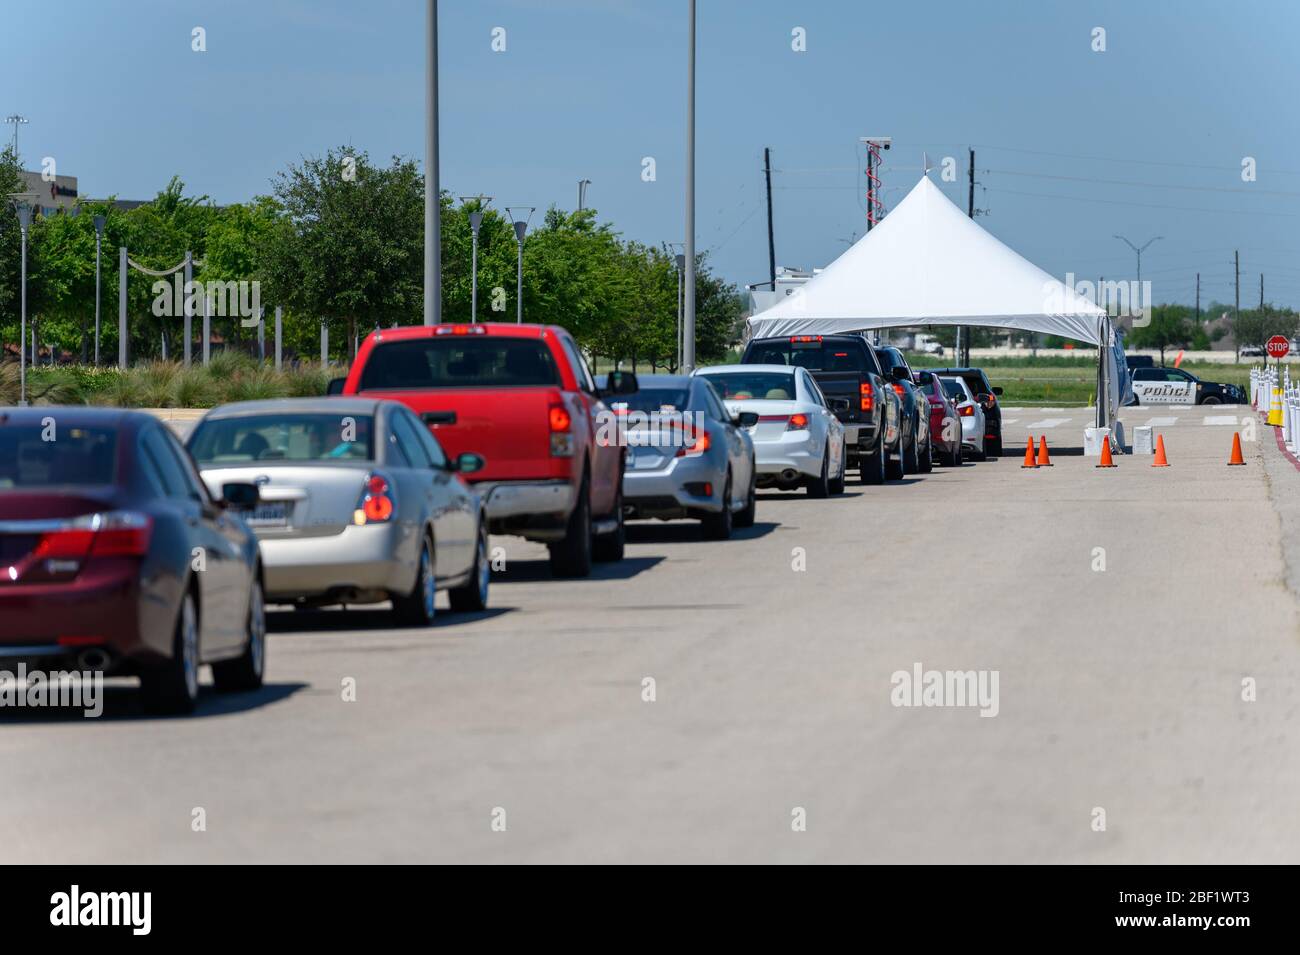 Sugar Land, Texas - April 16, 2020: Cars line up at city COVID-19 drive-through testing center Stock Photo